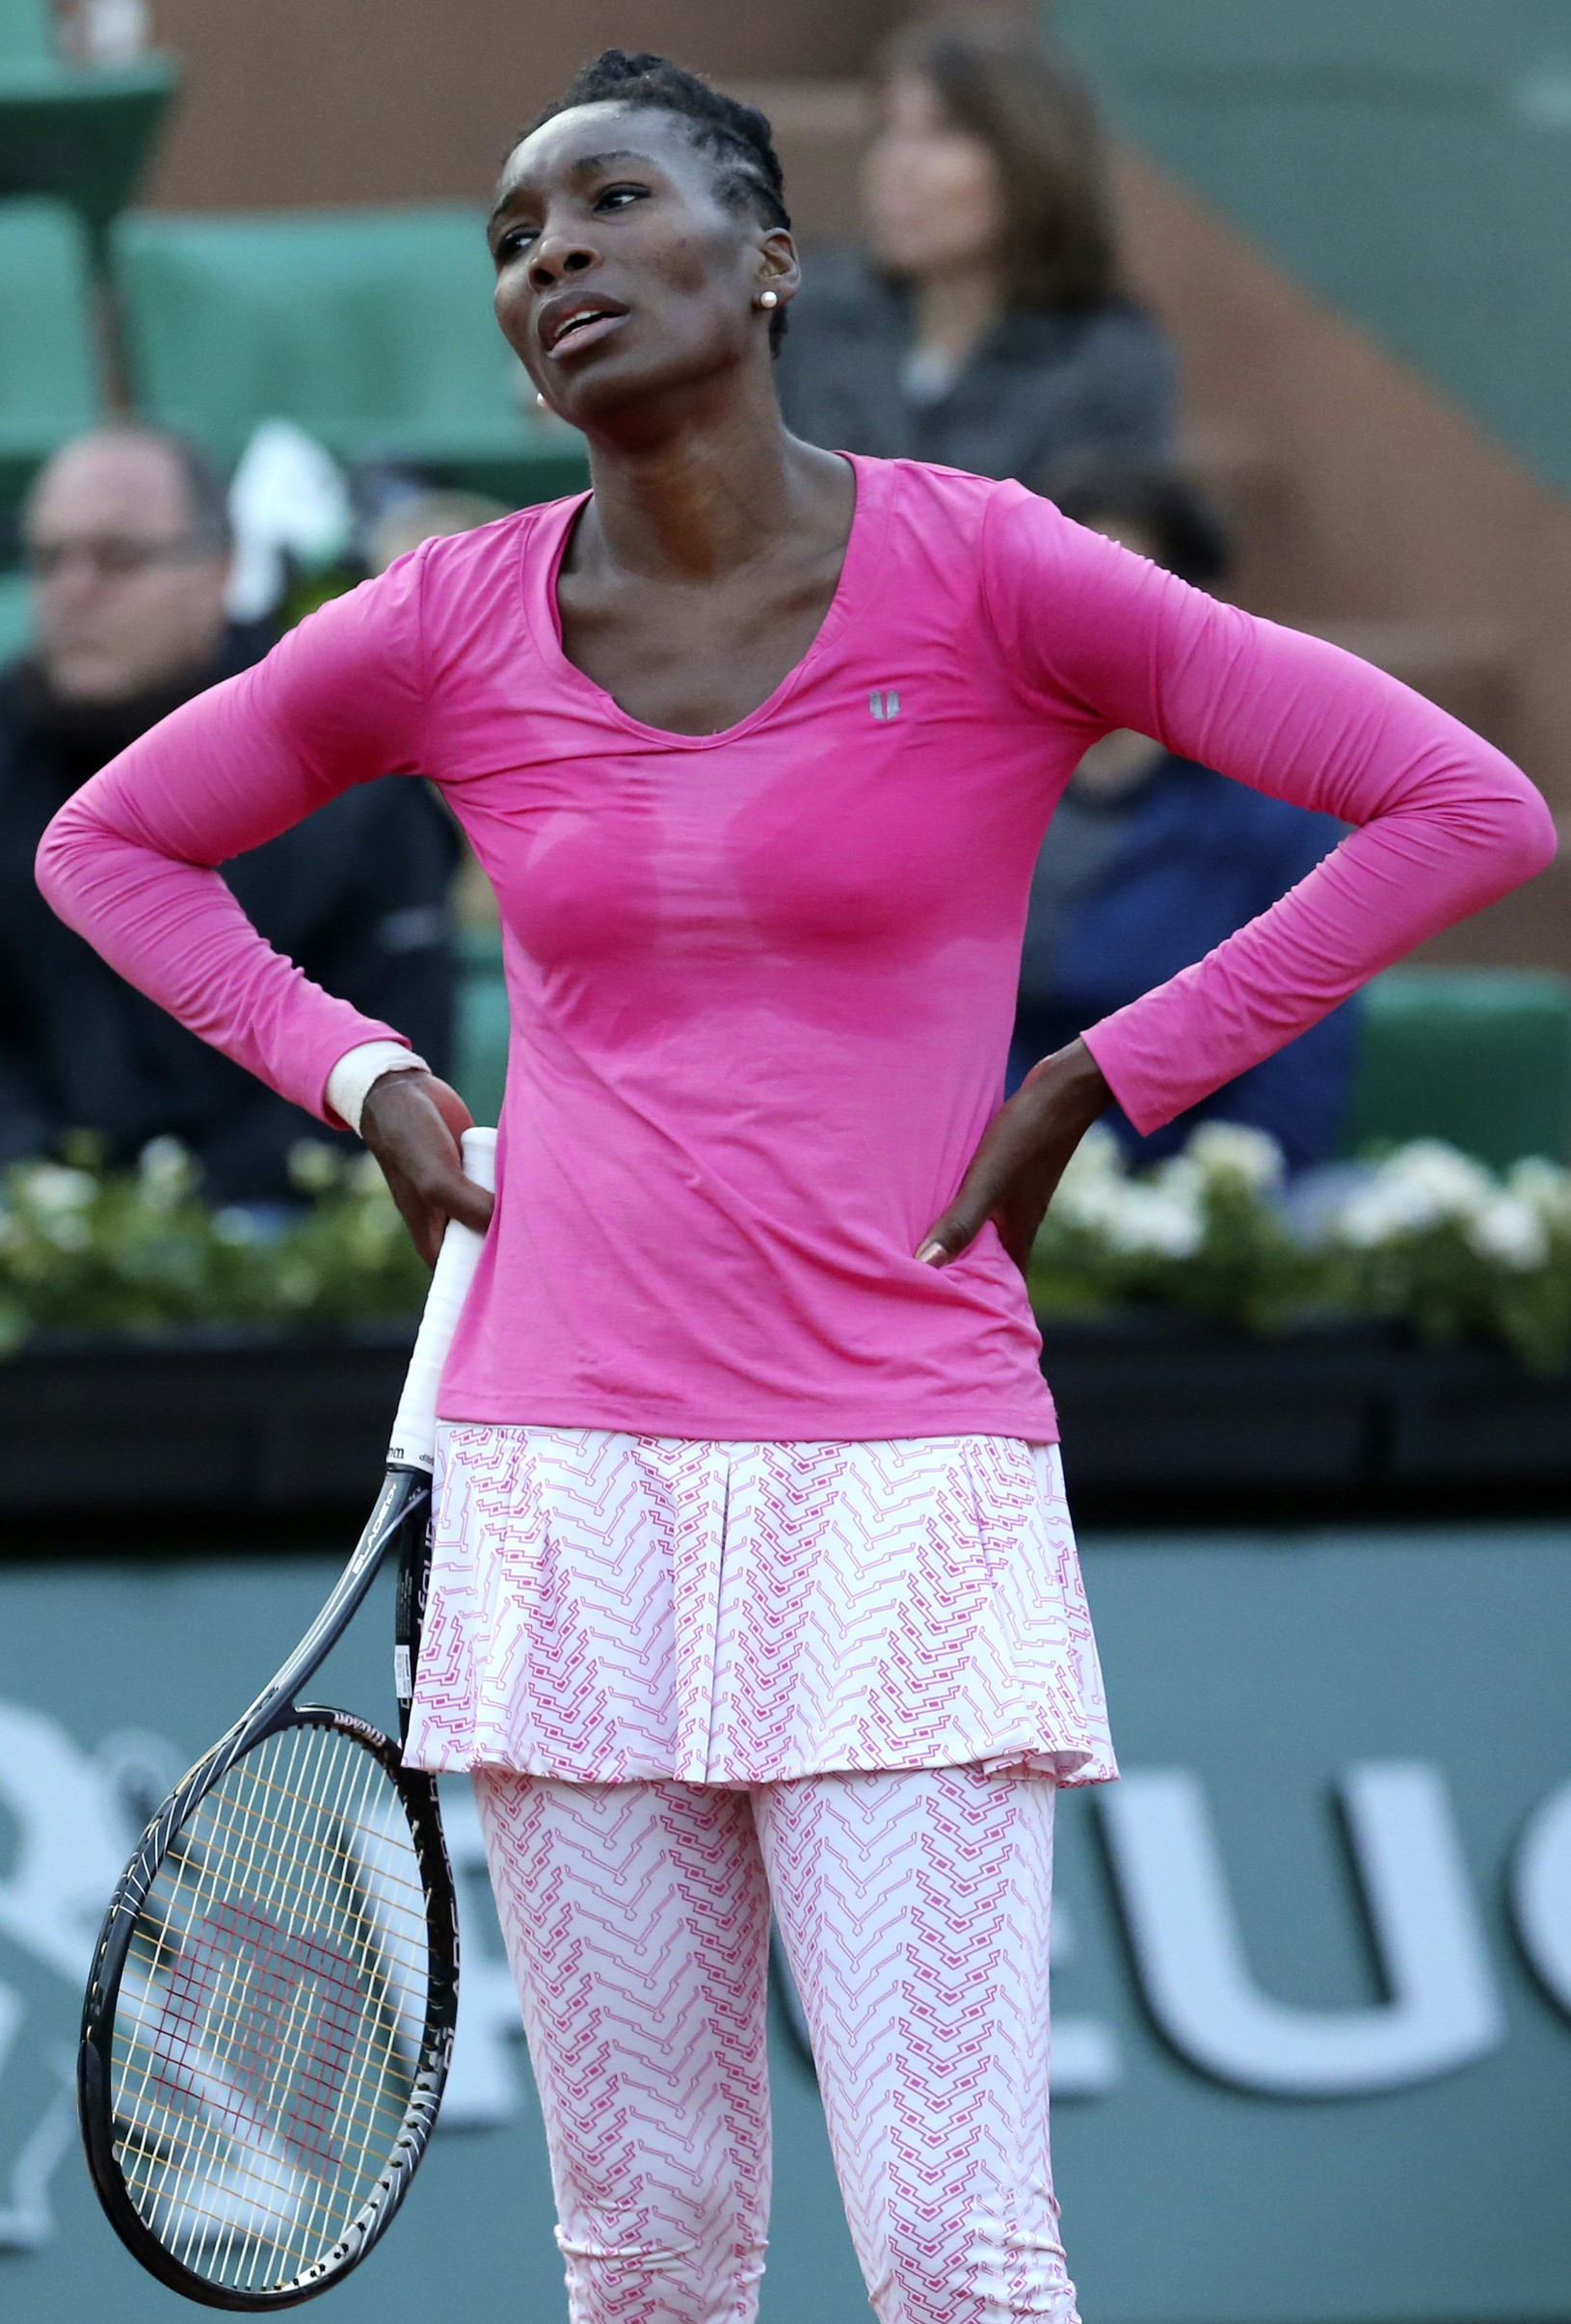 Venus Williamsová chystá návrat